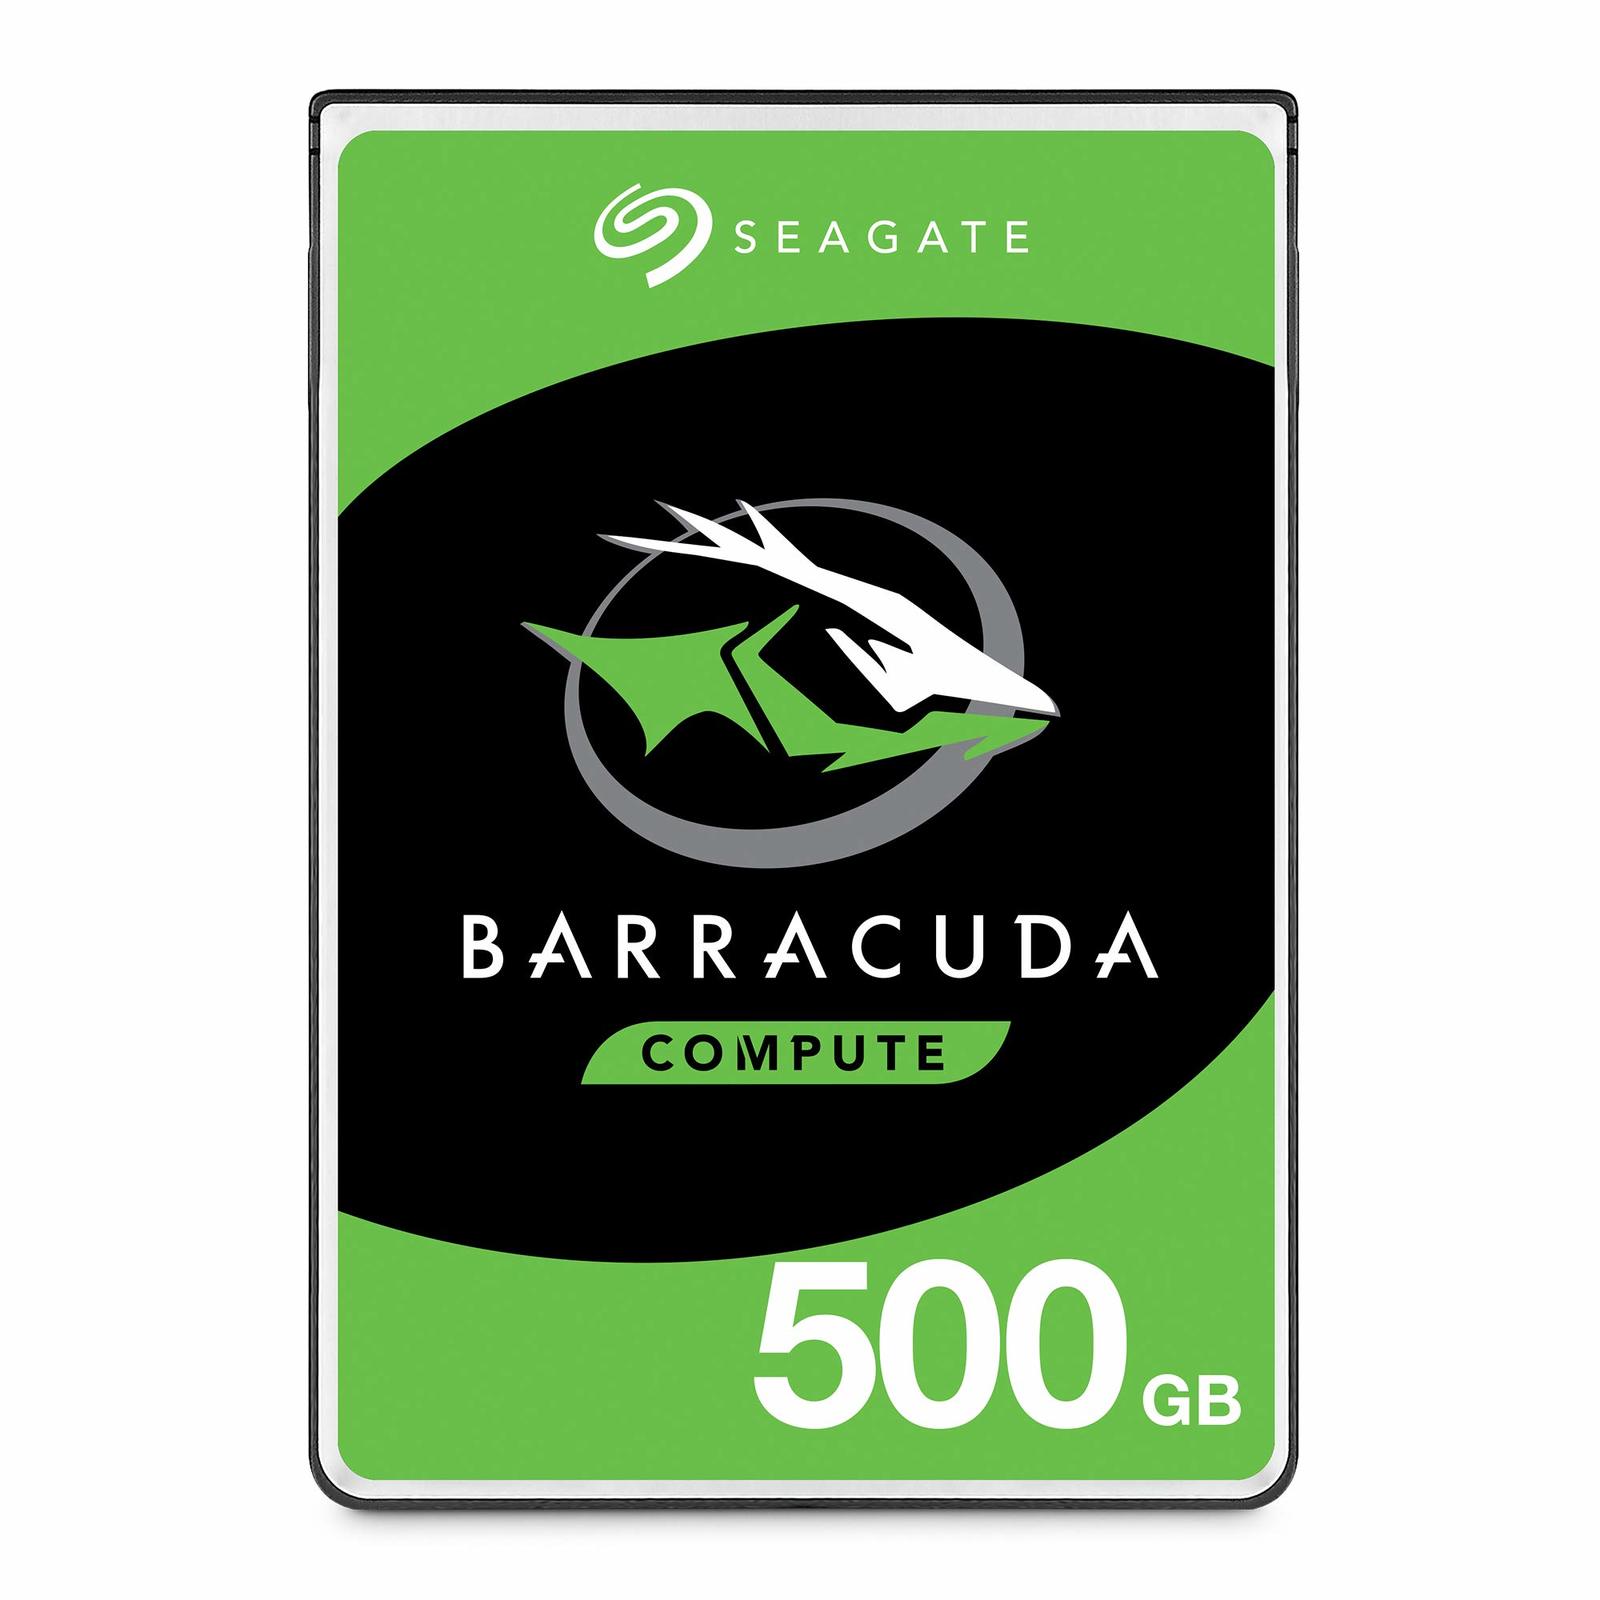 Seagate BarraCuda Mobile Hard Drive 500GB SATA 6Gb/s 128MB Cache 2.5-Inch 7mm (S - $74.51 - $256.88